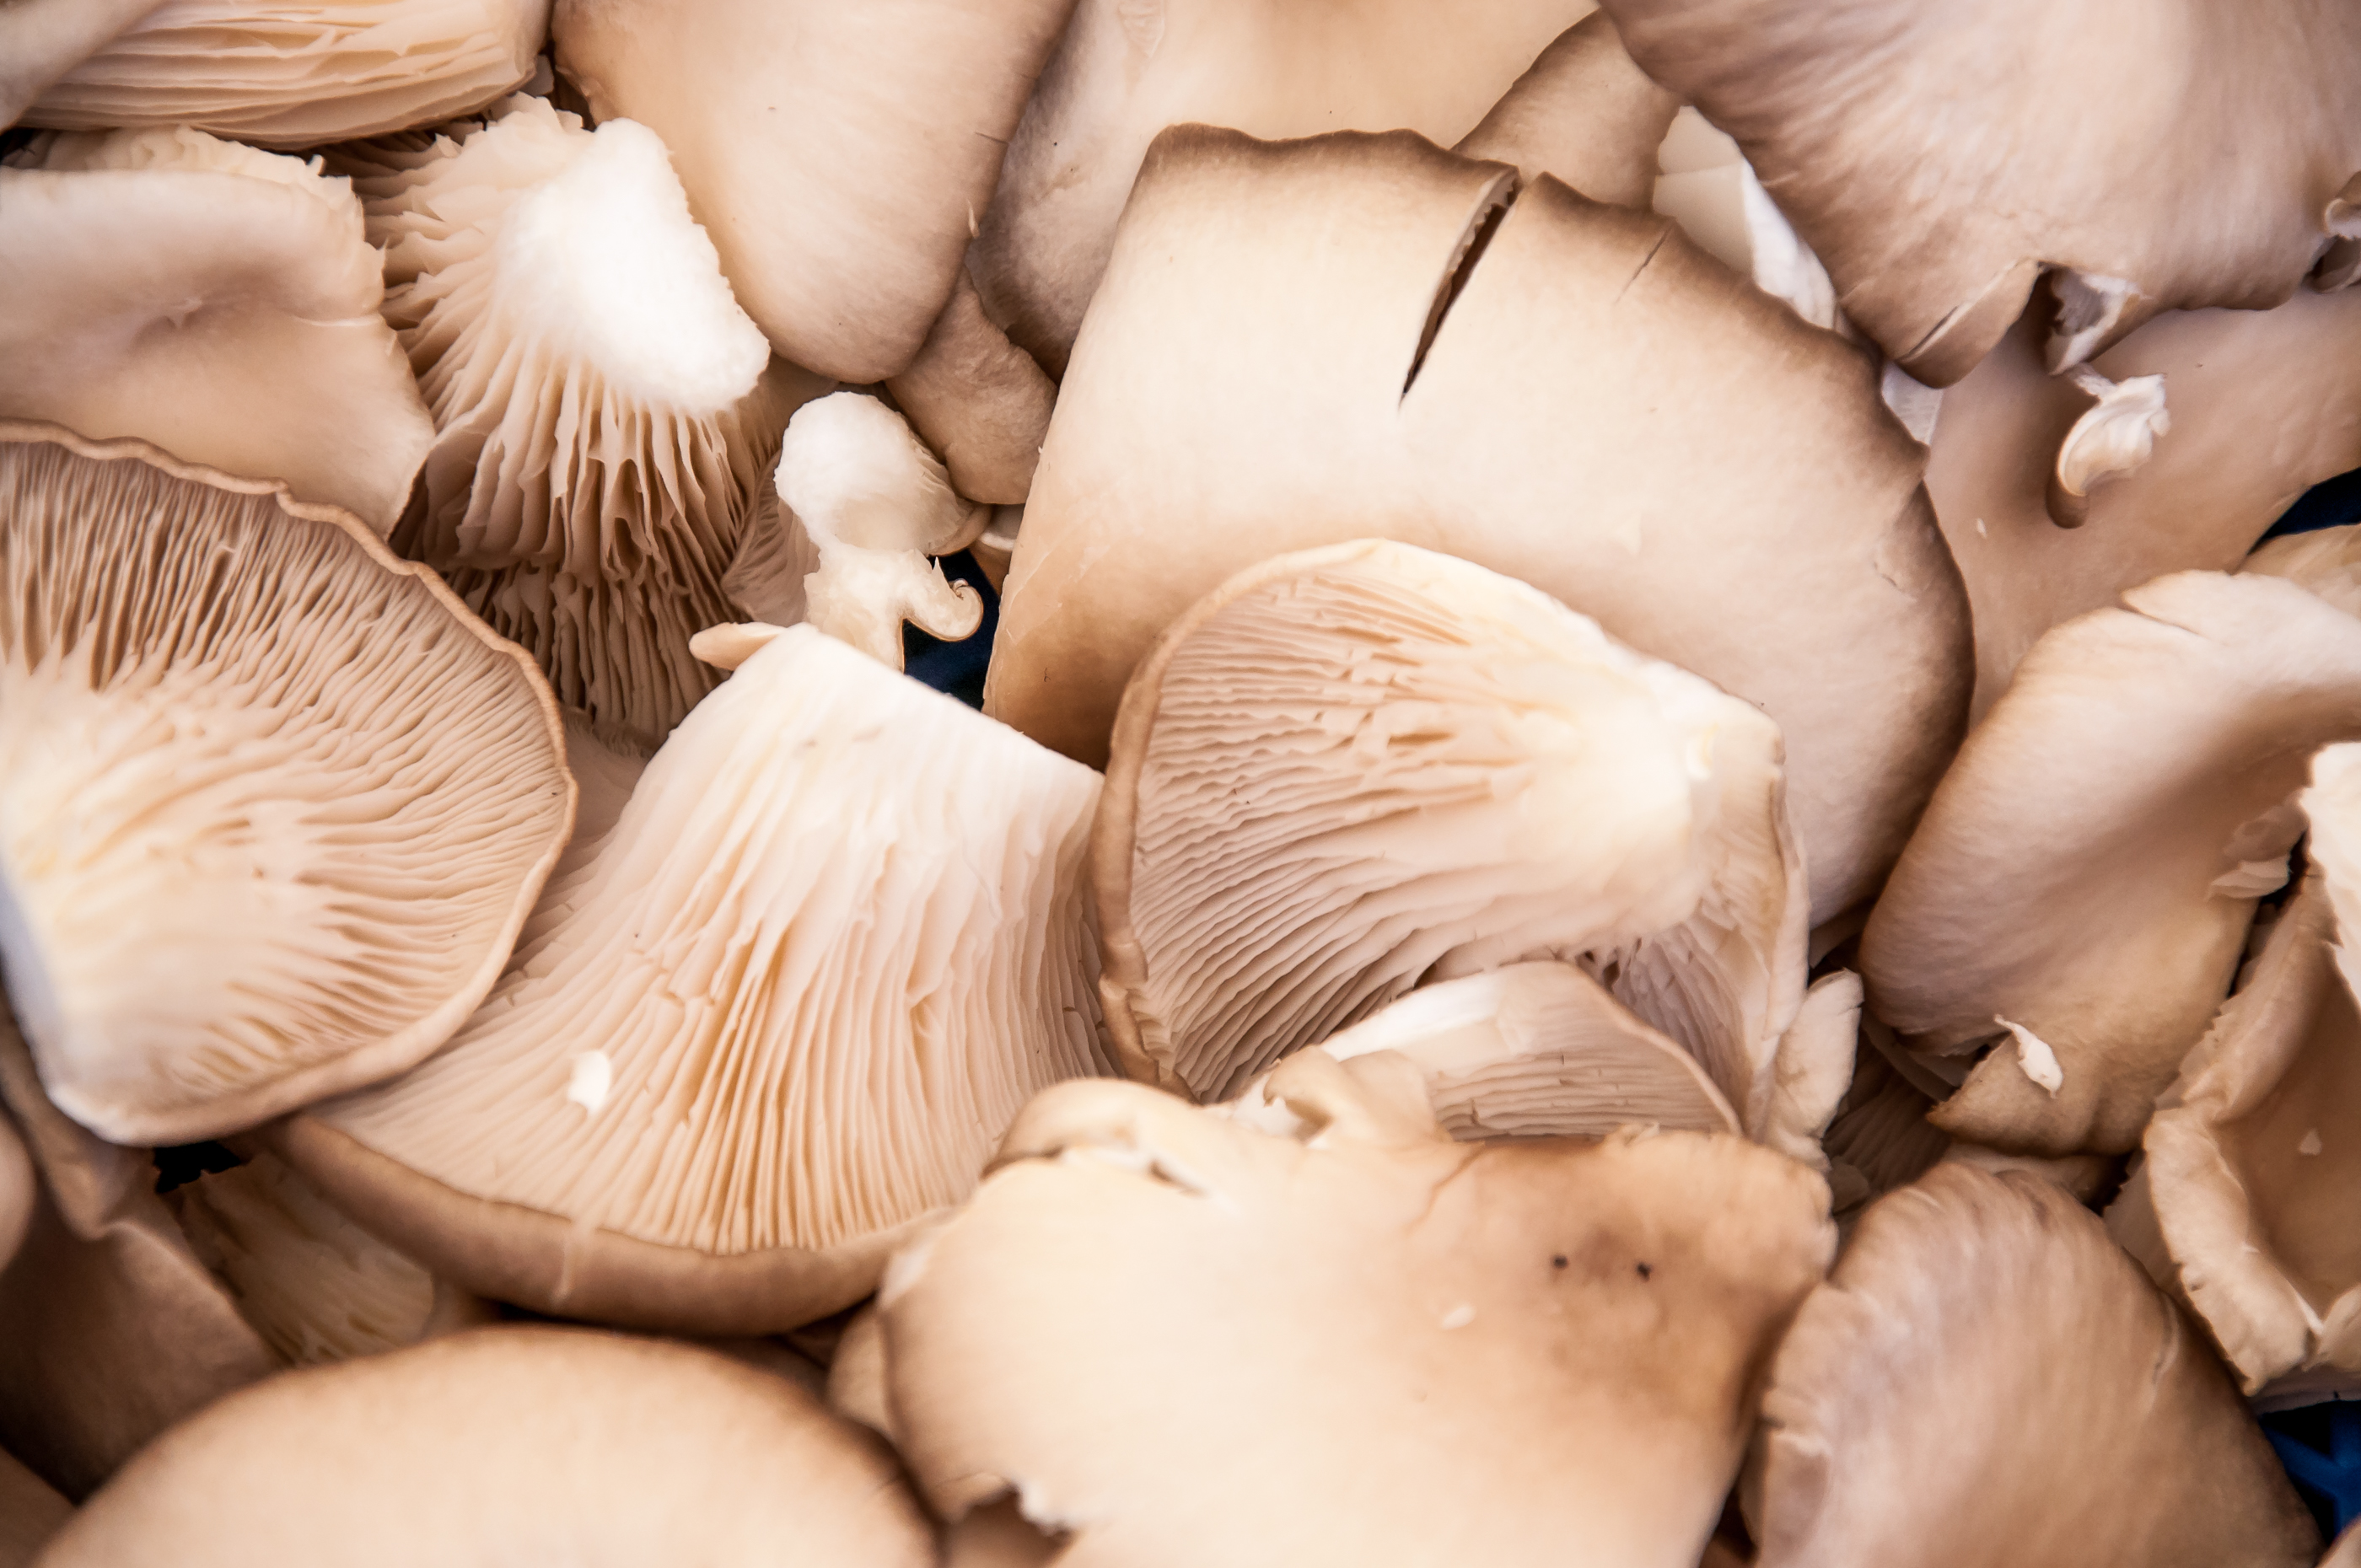 Oyster mushrooms photo